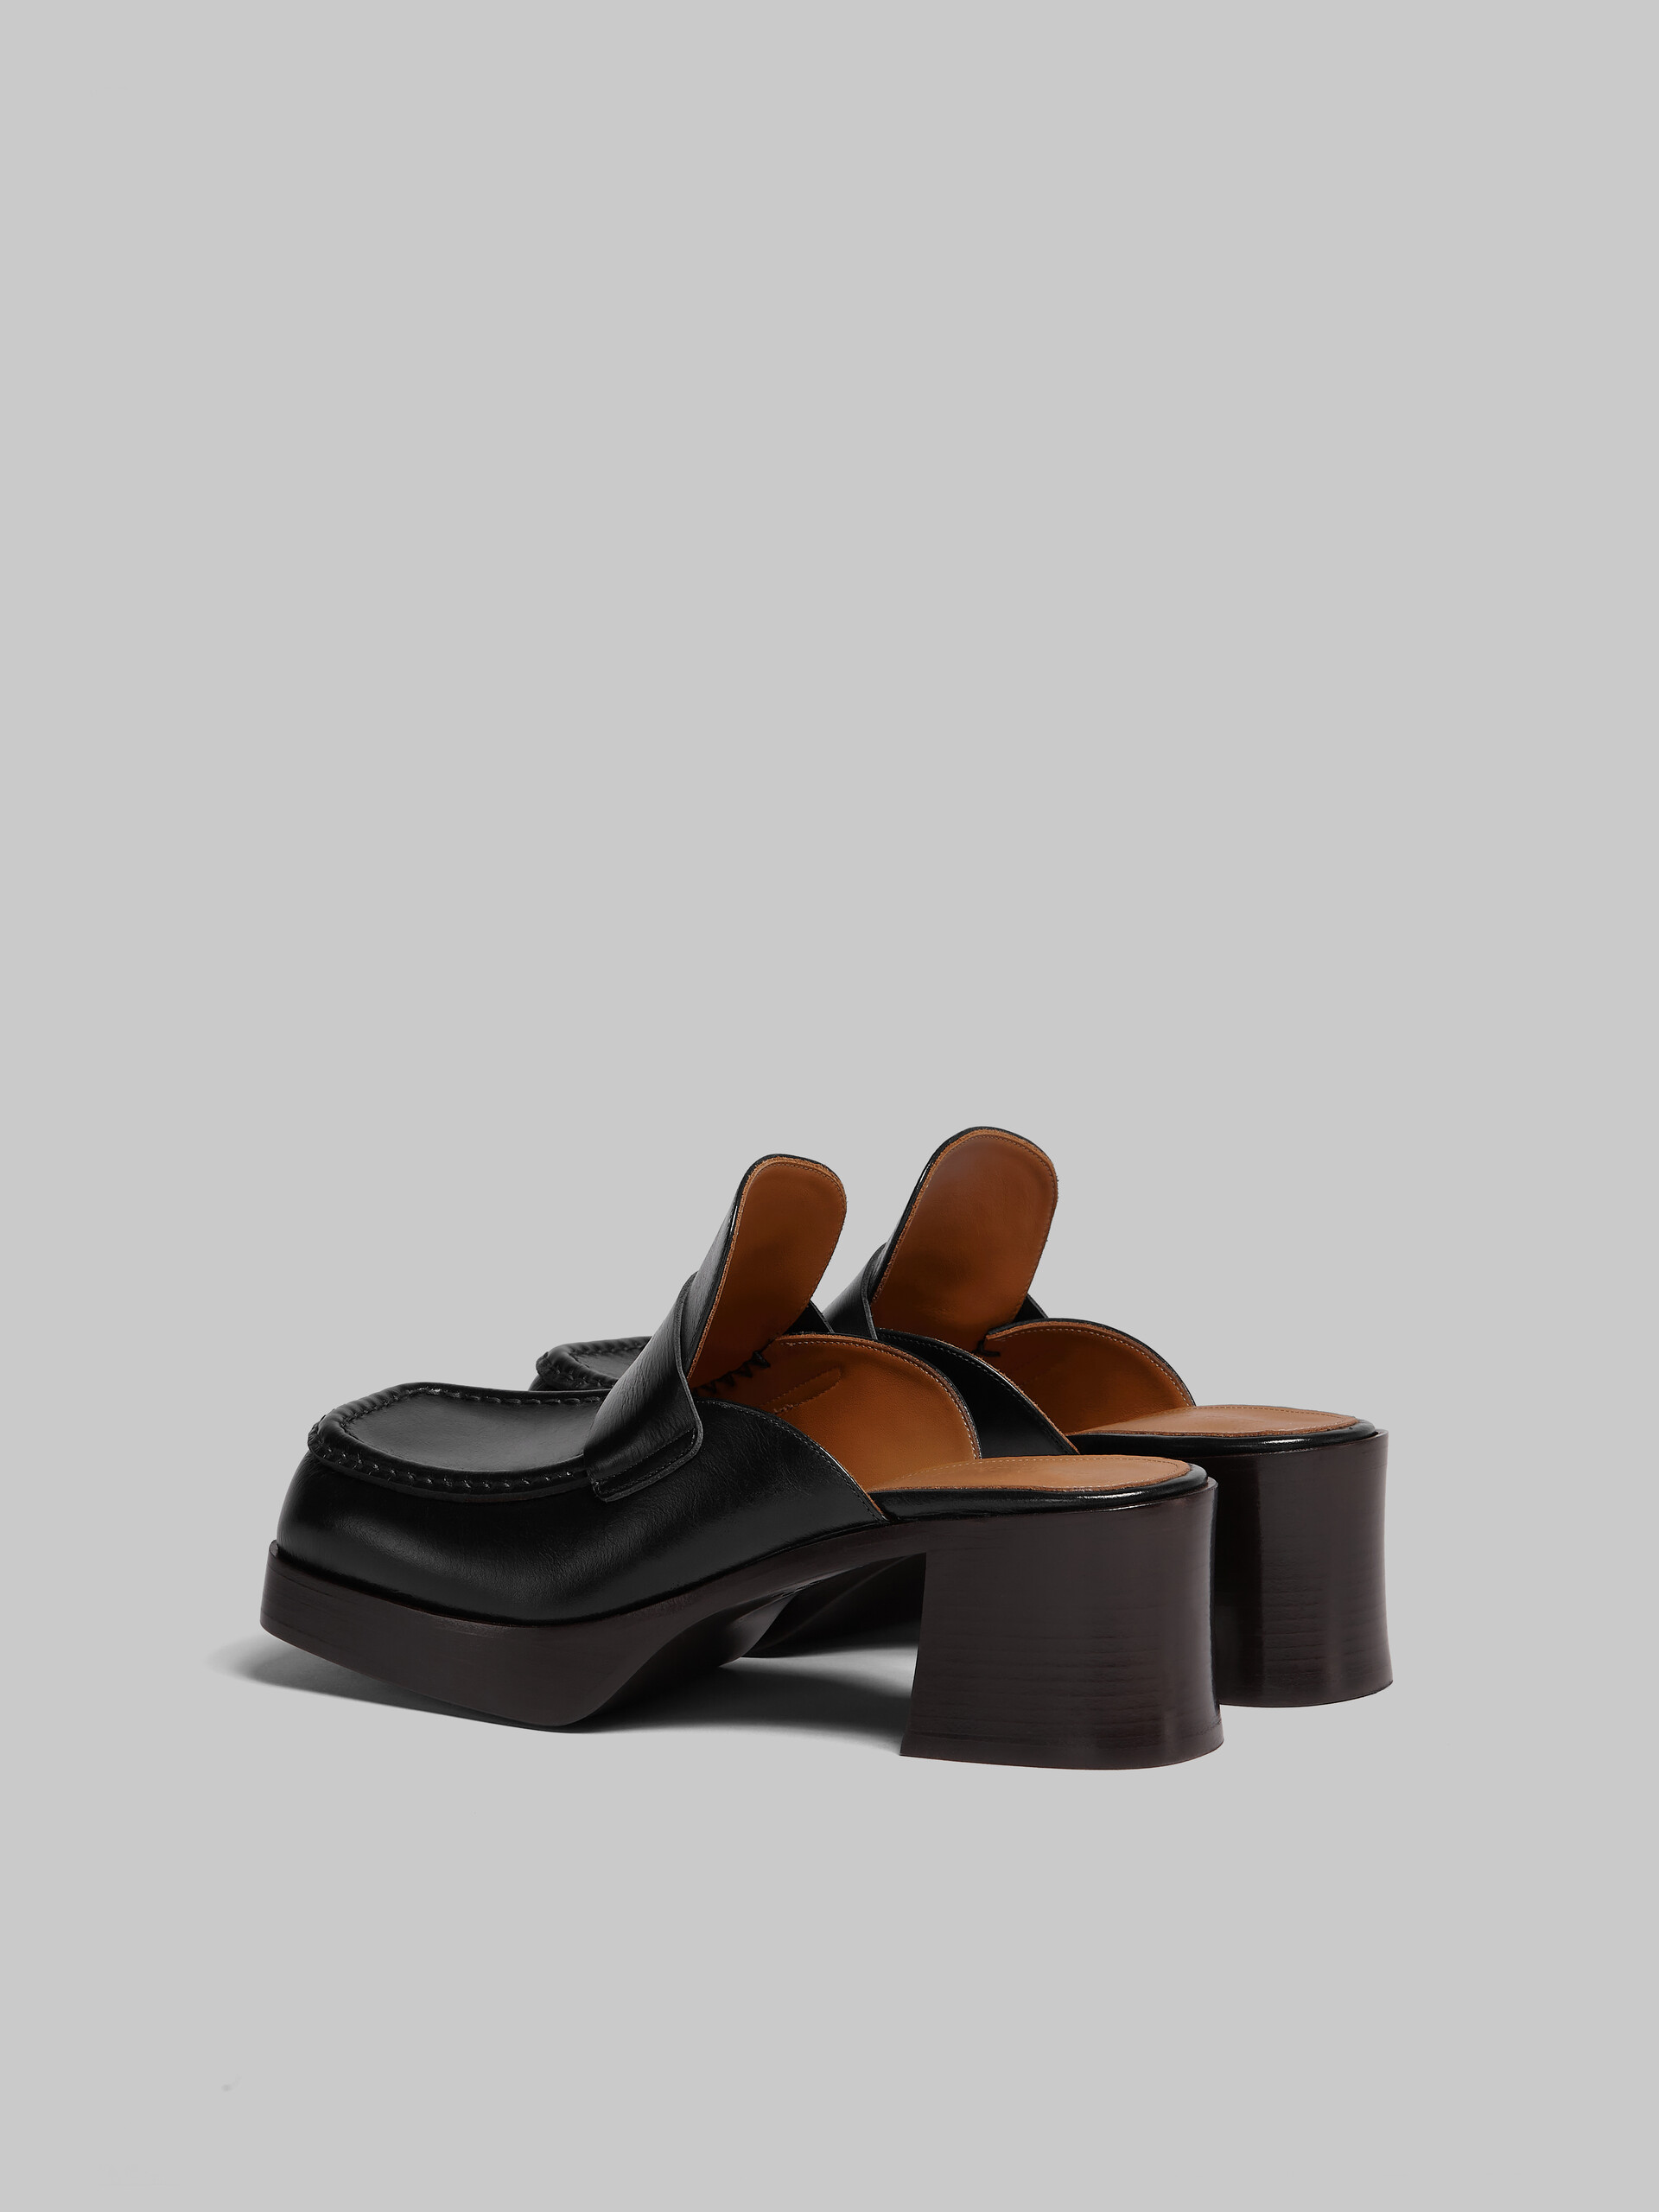 Black leather heeled mule - Clogs - Image 3